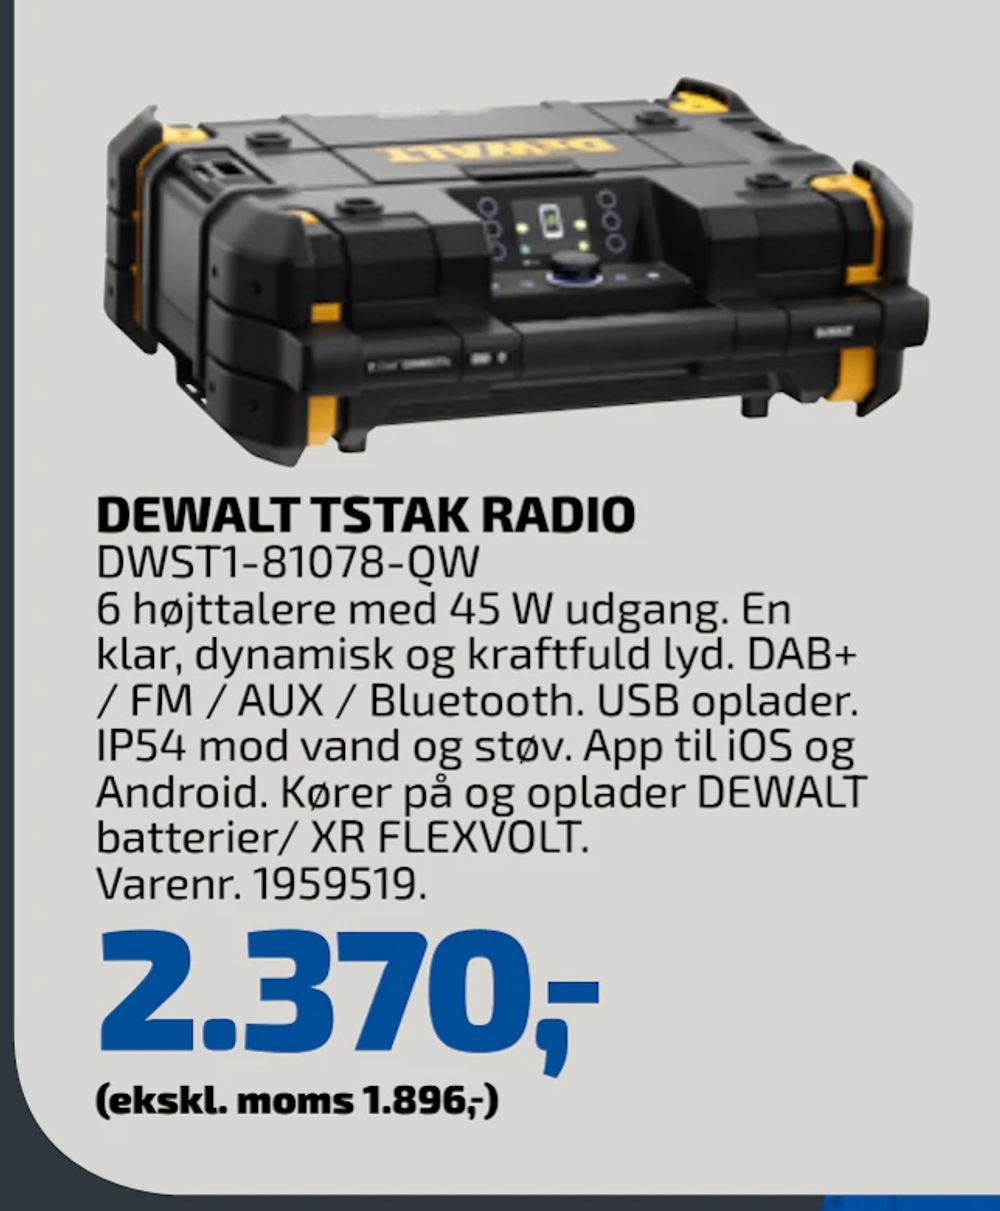 Tilbud på DEWALT TSTAK RADIO fra Davidsen til 2.370 kr.